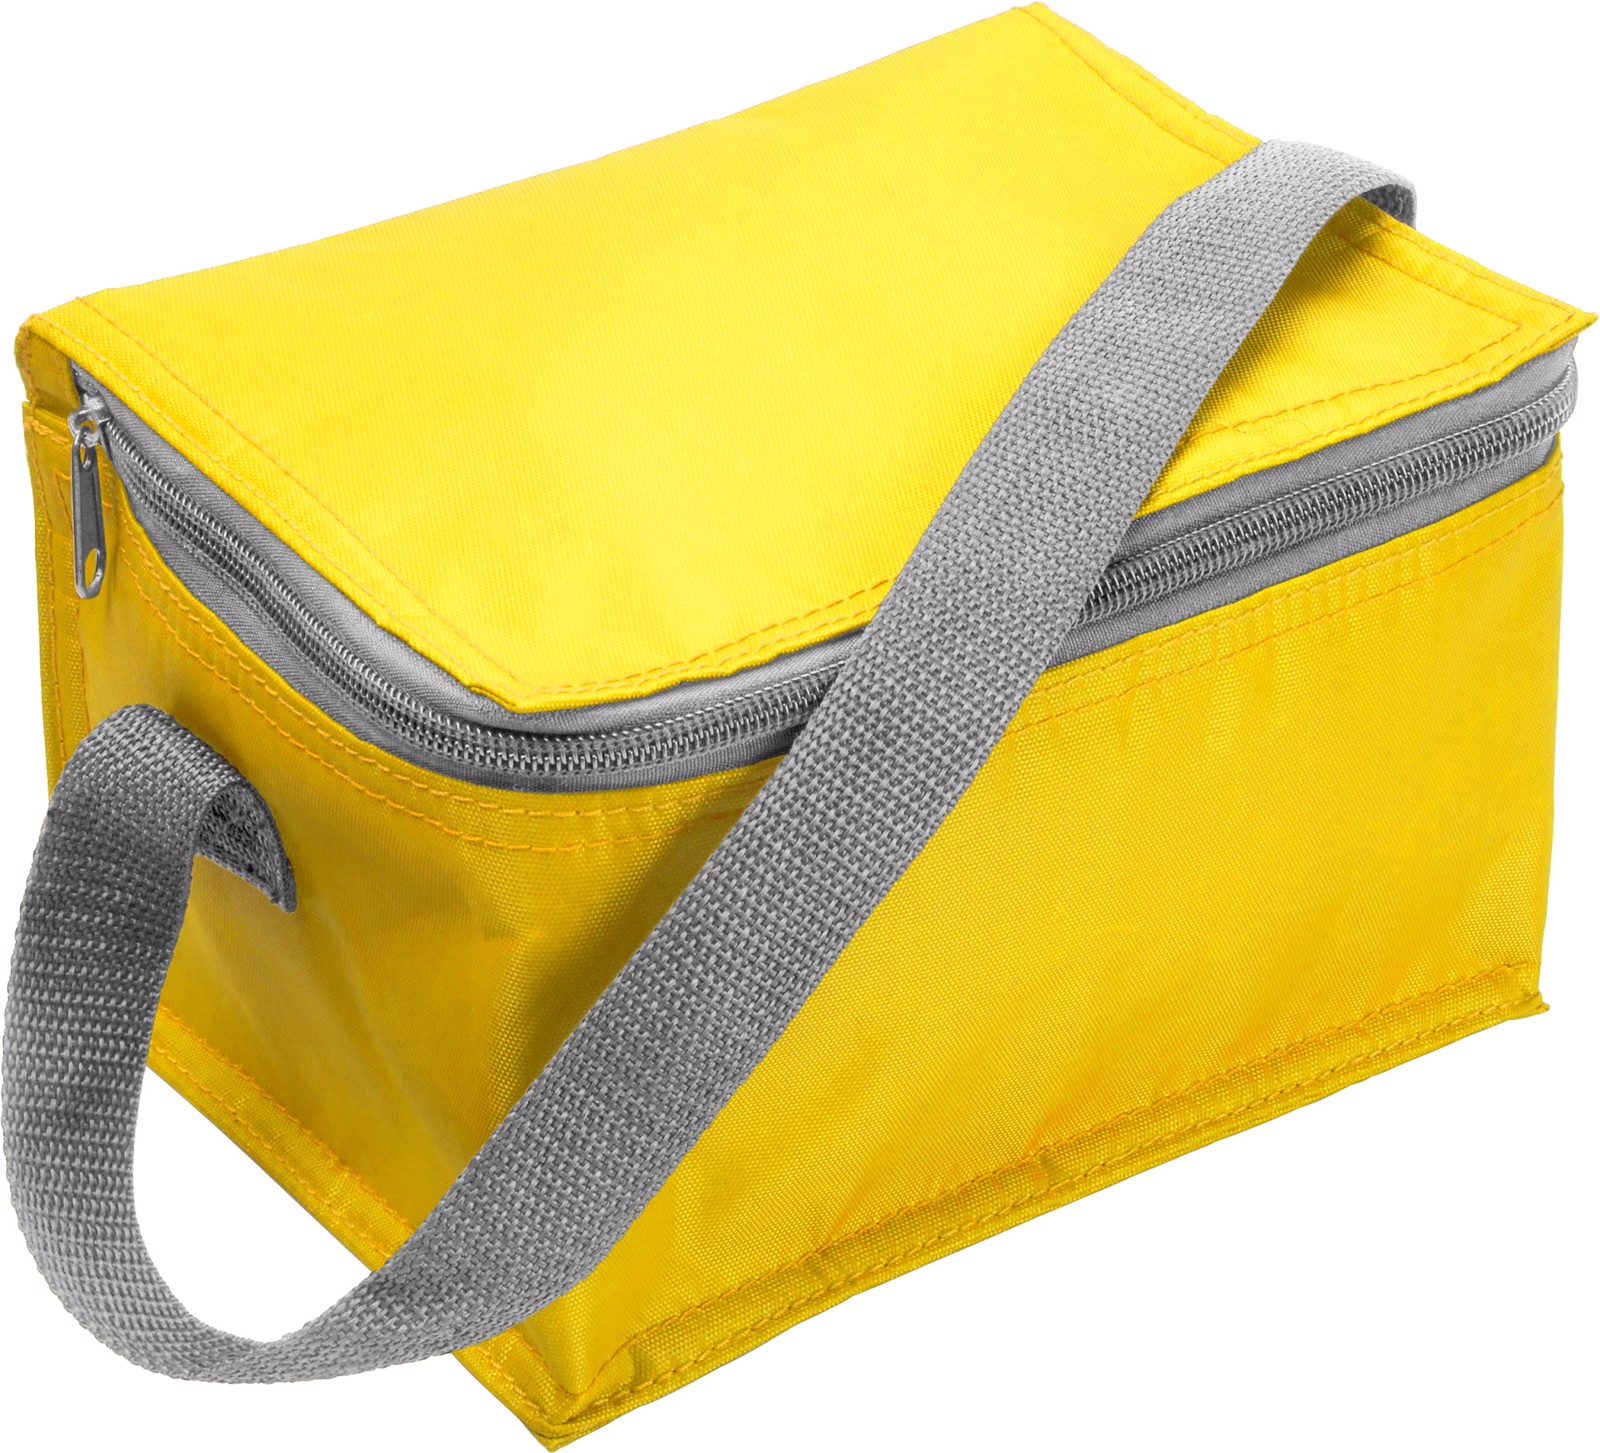 Polyester (420D) cooler bag - Yellow